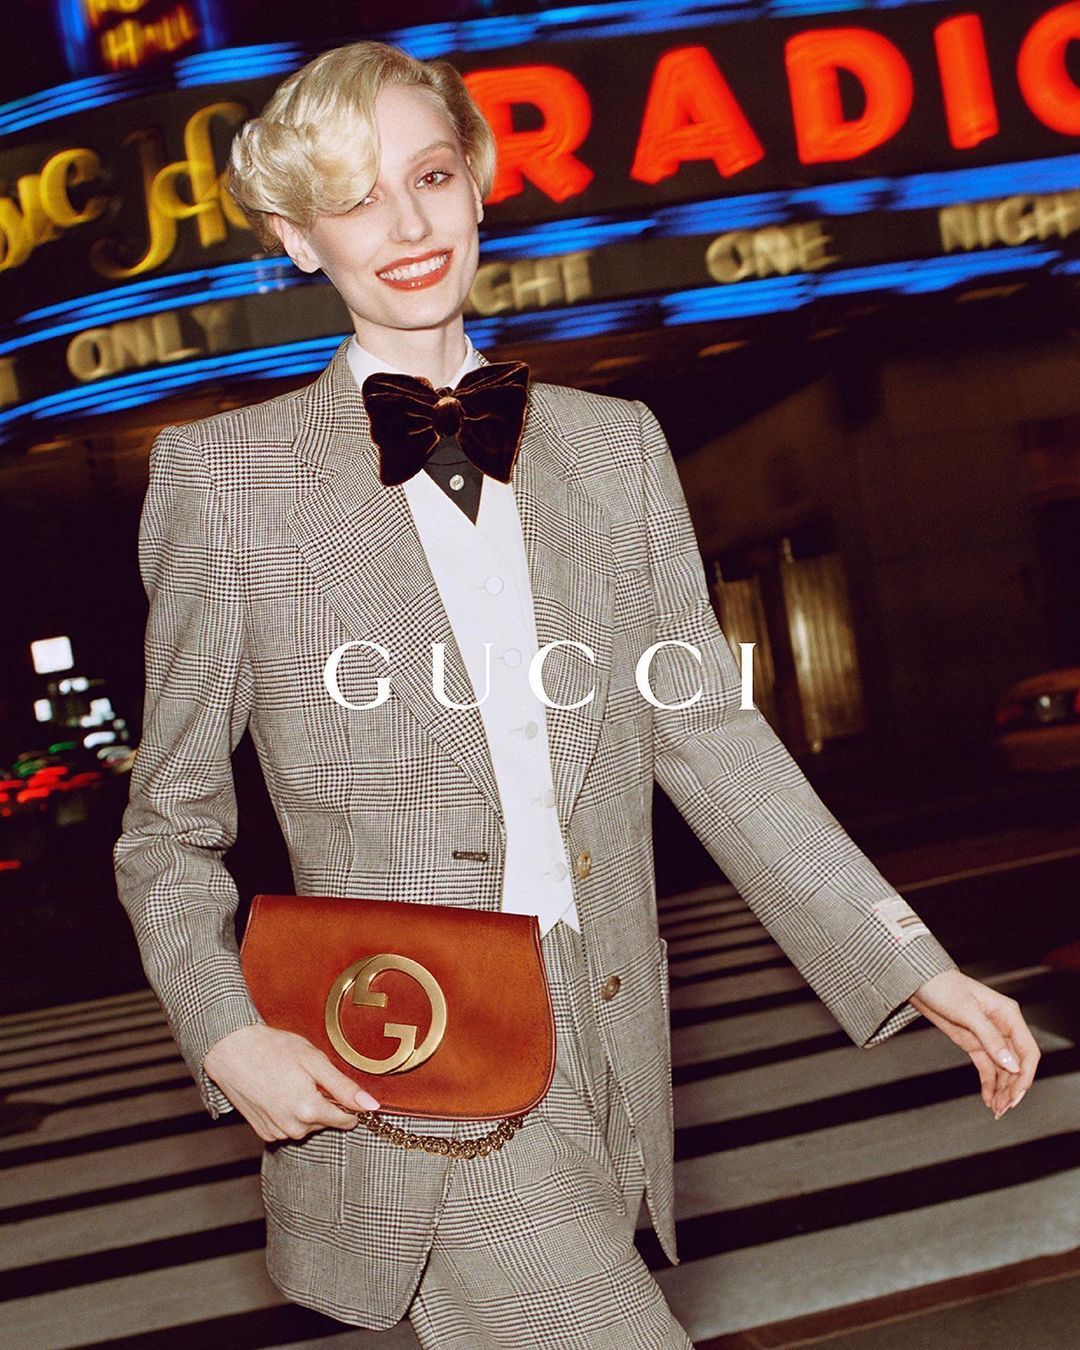 Pencinta Gaya Klasik? Intip Koleksi Tas Terbaru Gucci Blondie